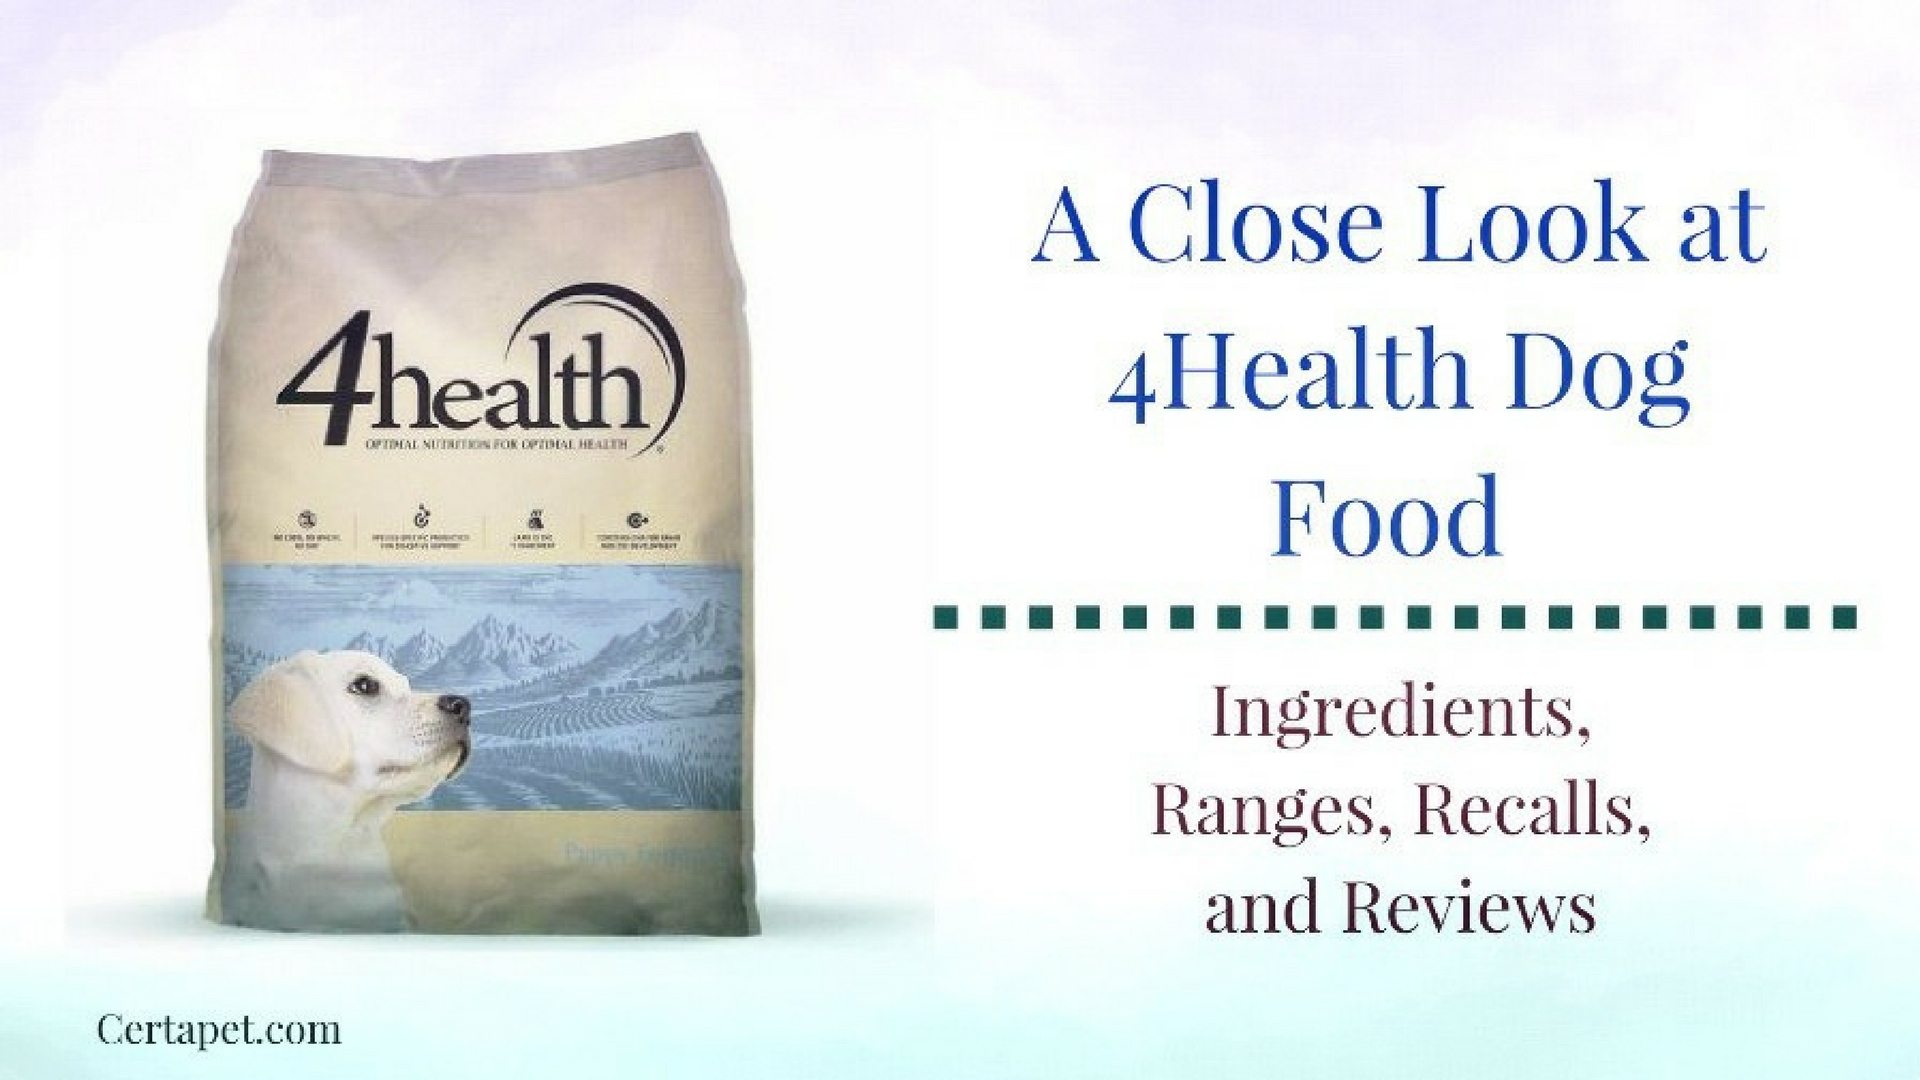 4health Dog Food Ingredients Recalls And Reviews Certapet